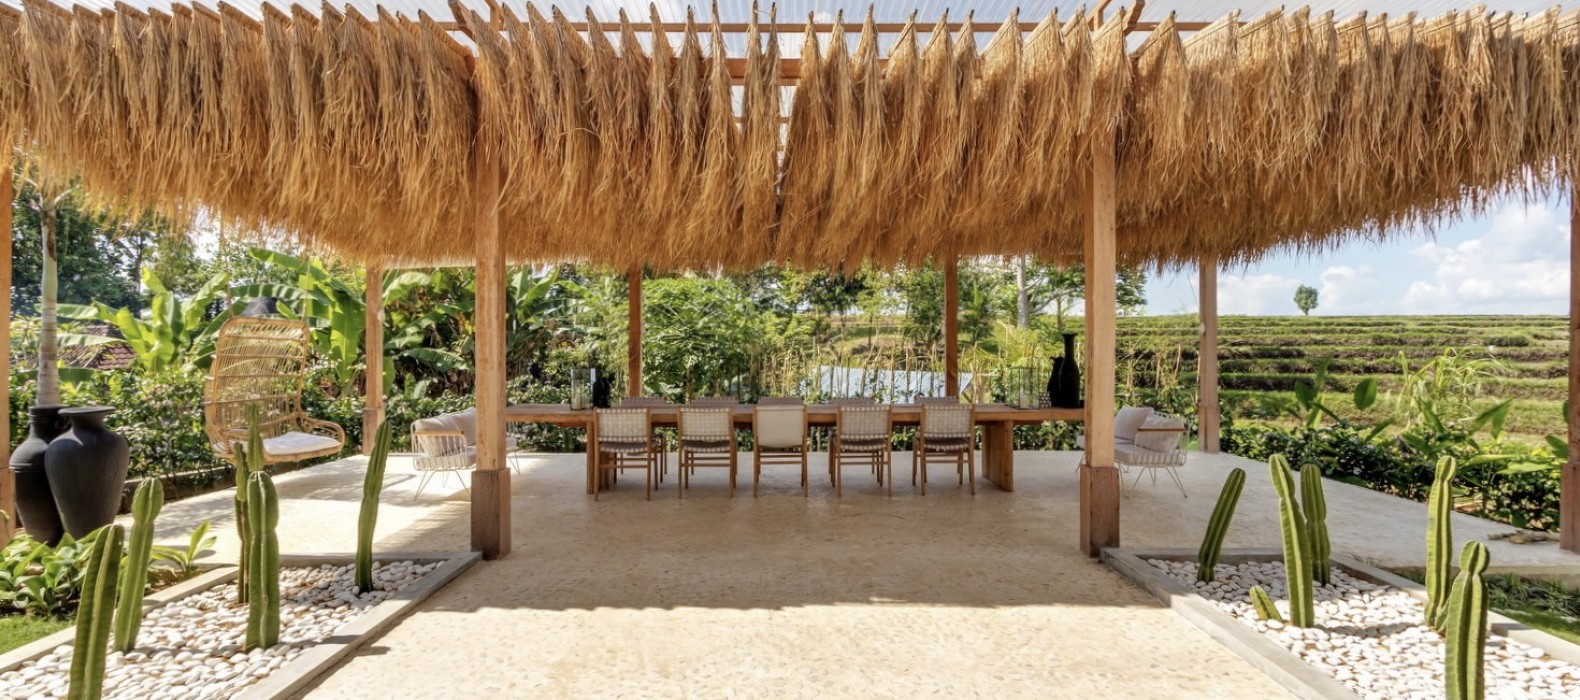 Exterior dining area of Villa Fortuna in Bali